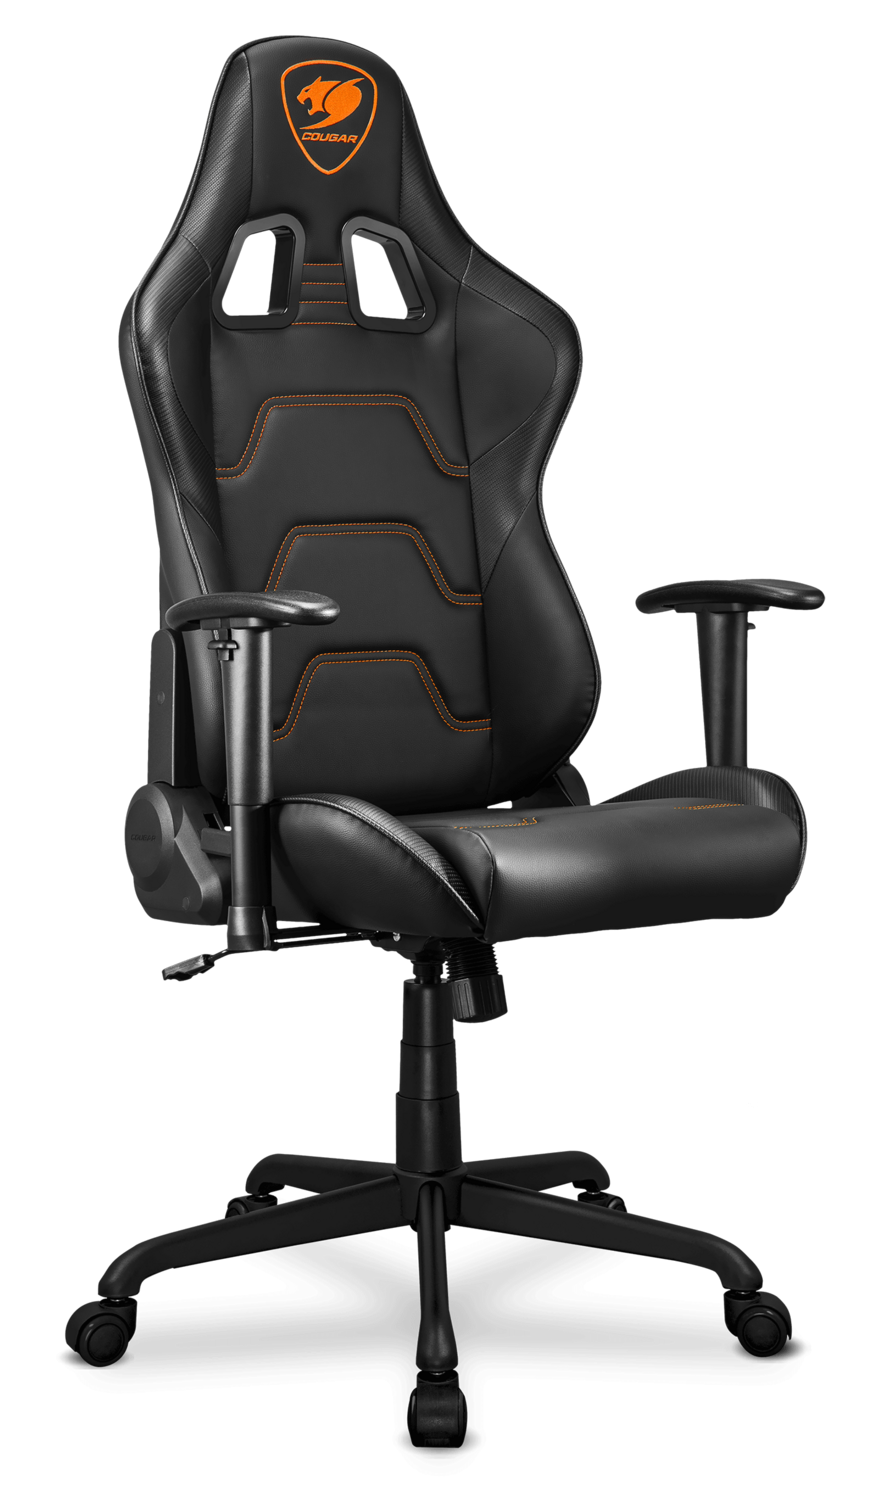 COUGAR Gaming chair Armor Elite Black